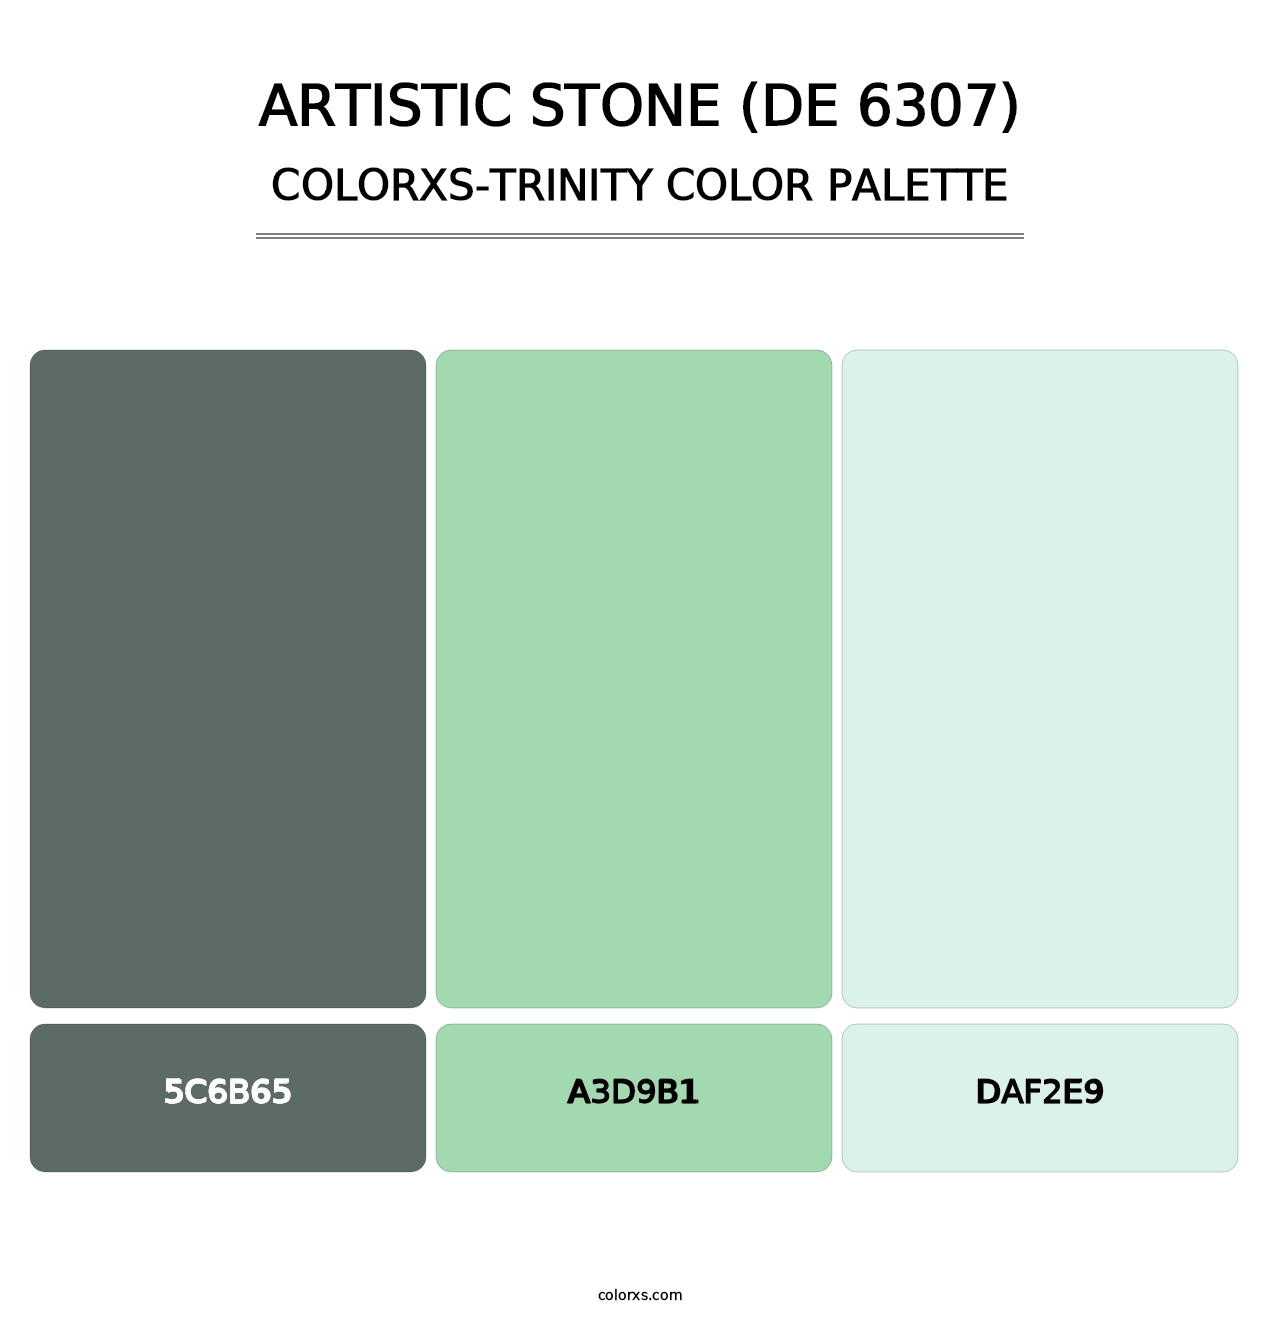 Artistic Stone (DE 6307) - Colorxs Trinity Palette